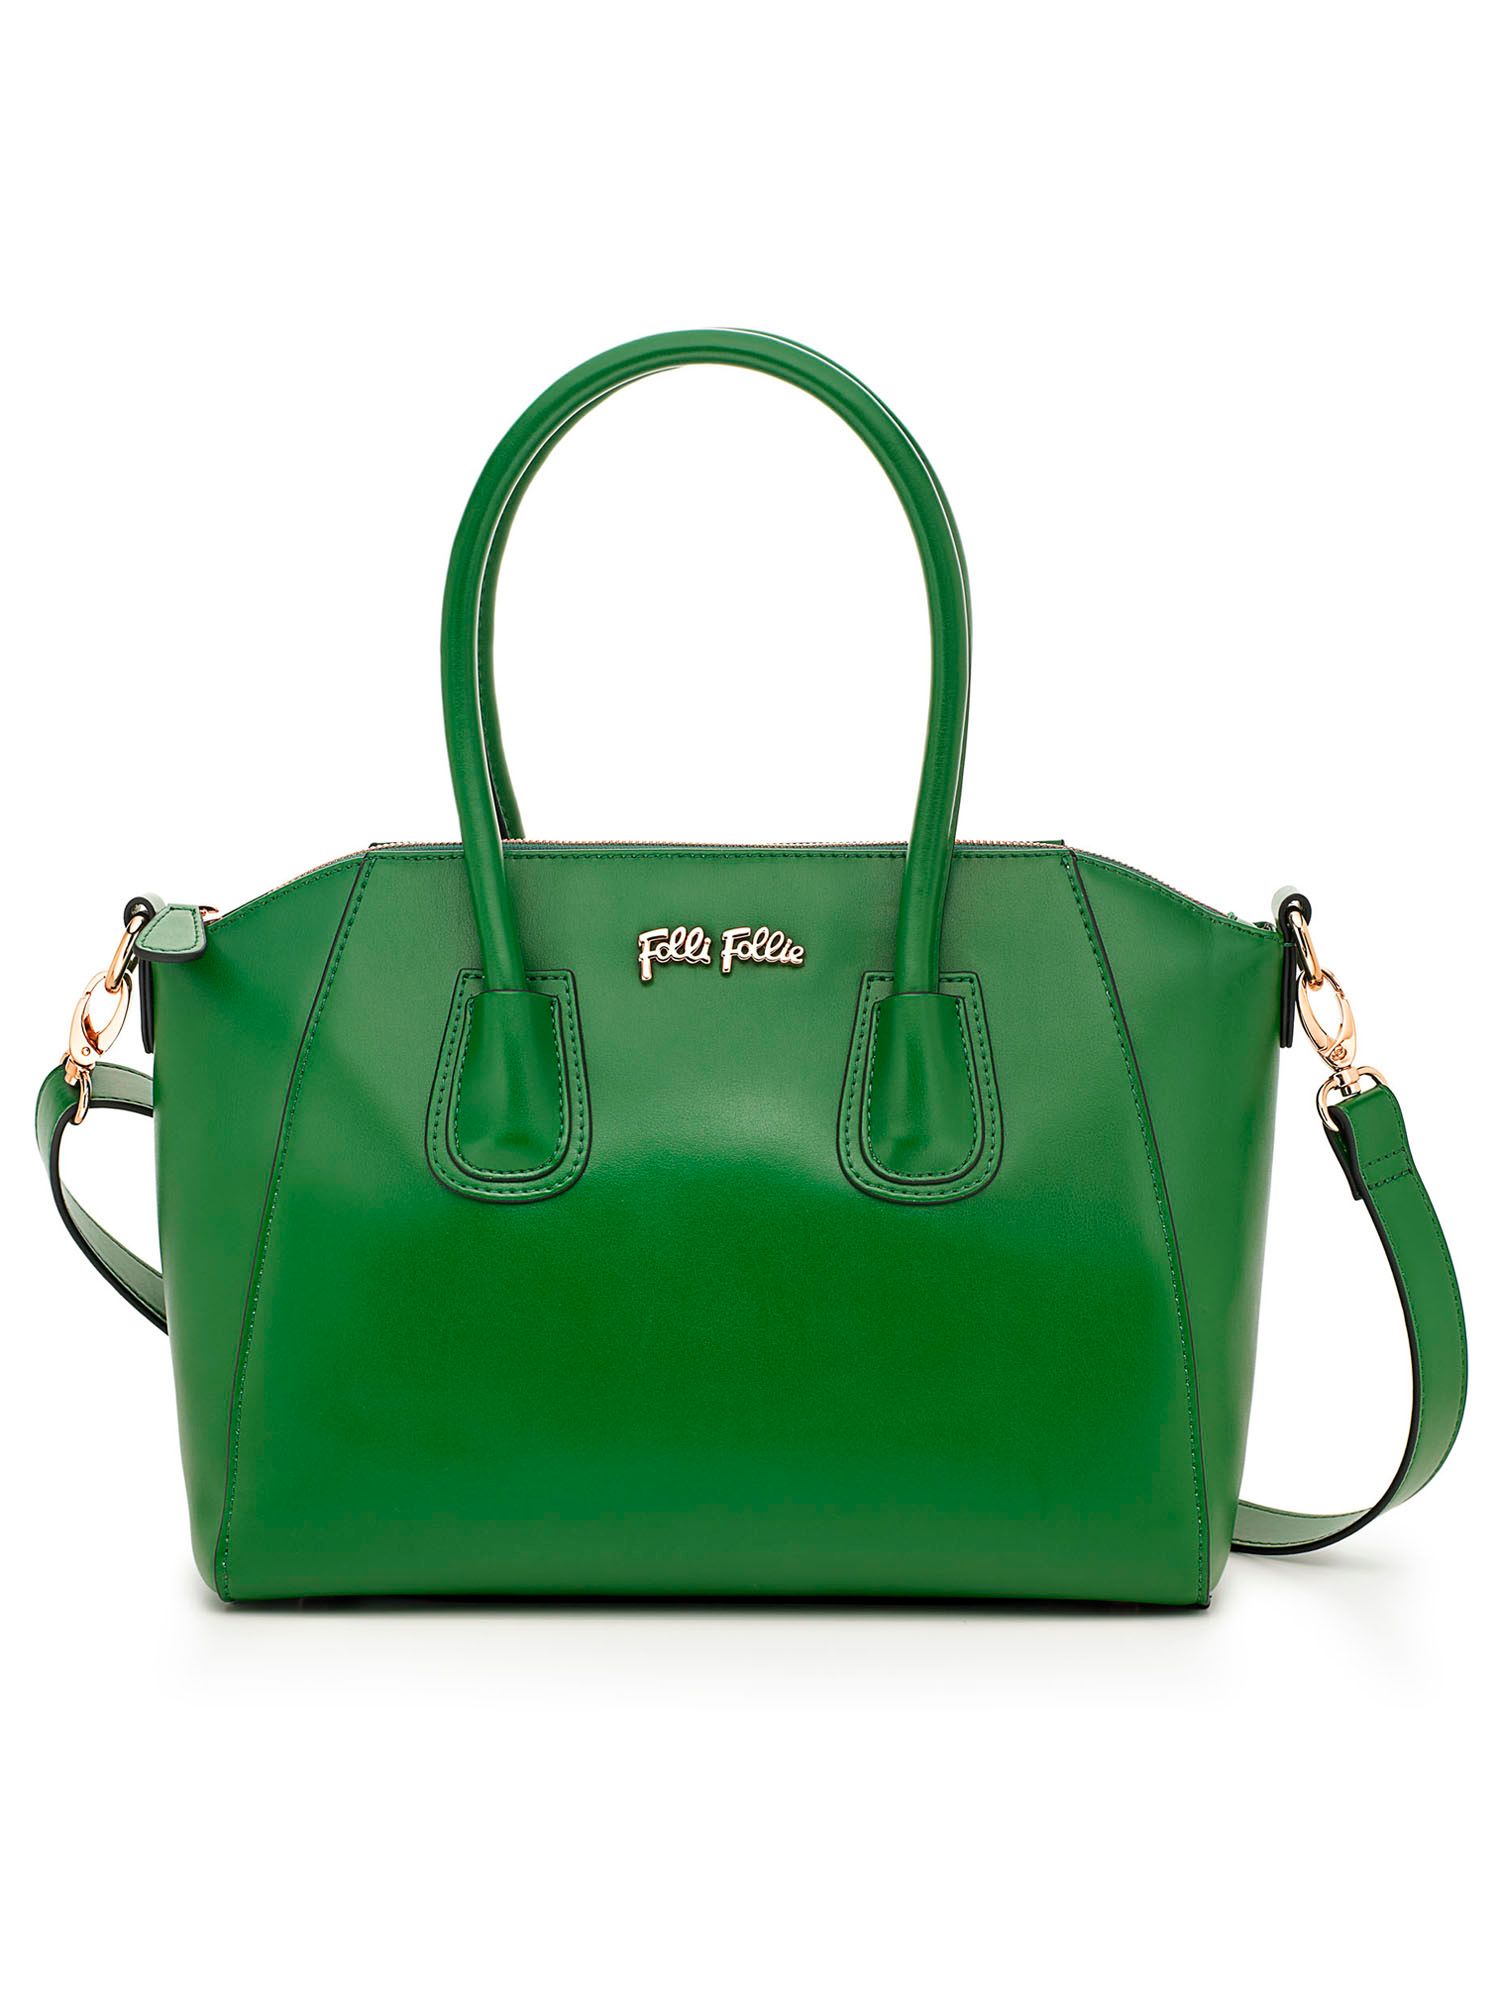 Folli Follie K Vintage Handbag in Green | Lyst